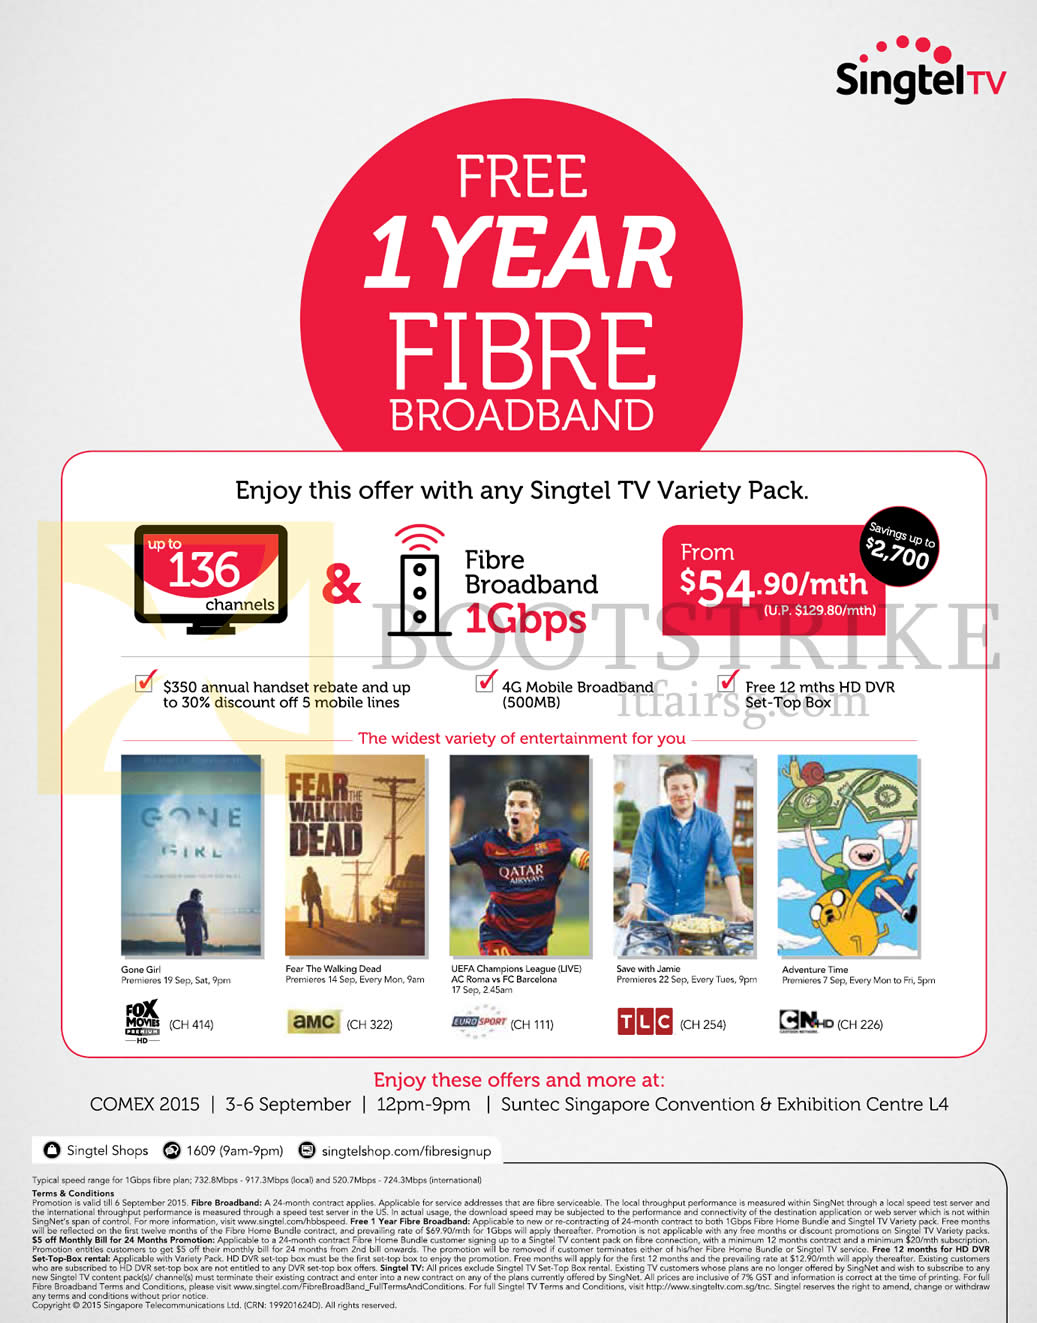 COMEX 2015 price list image brochure of Singtel TV Free 1 Year Fibre Broadband